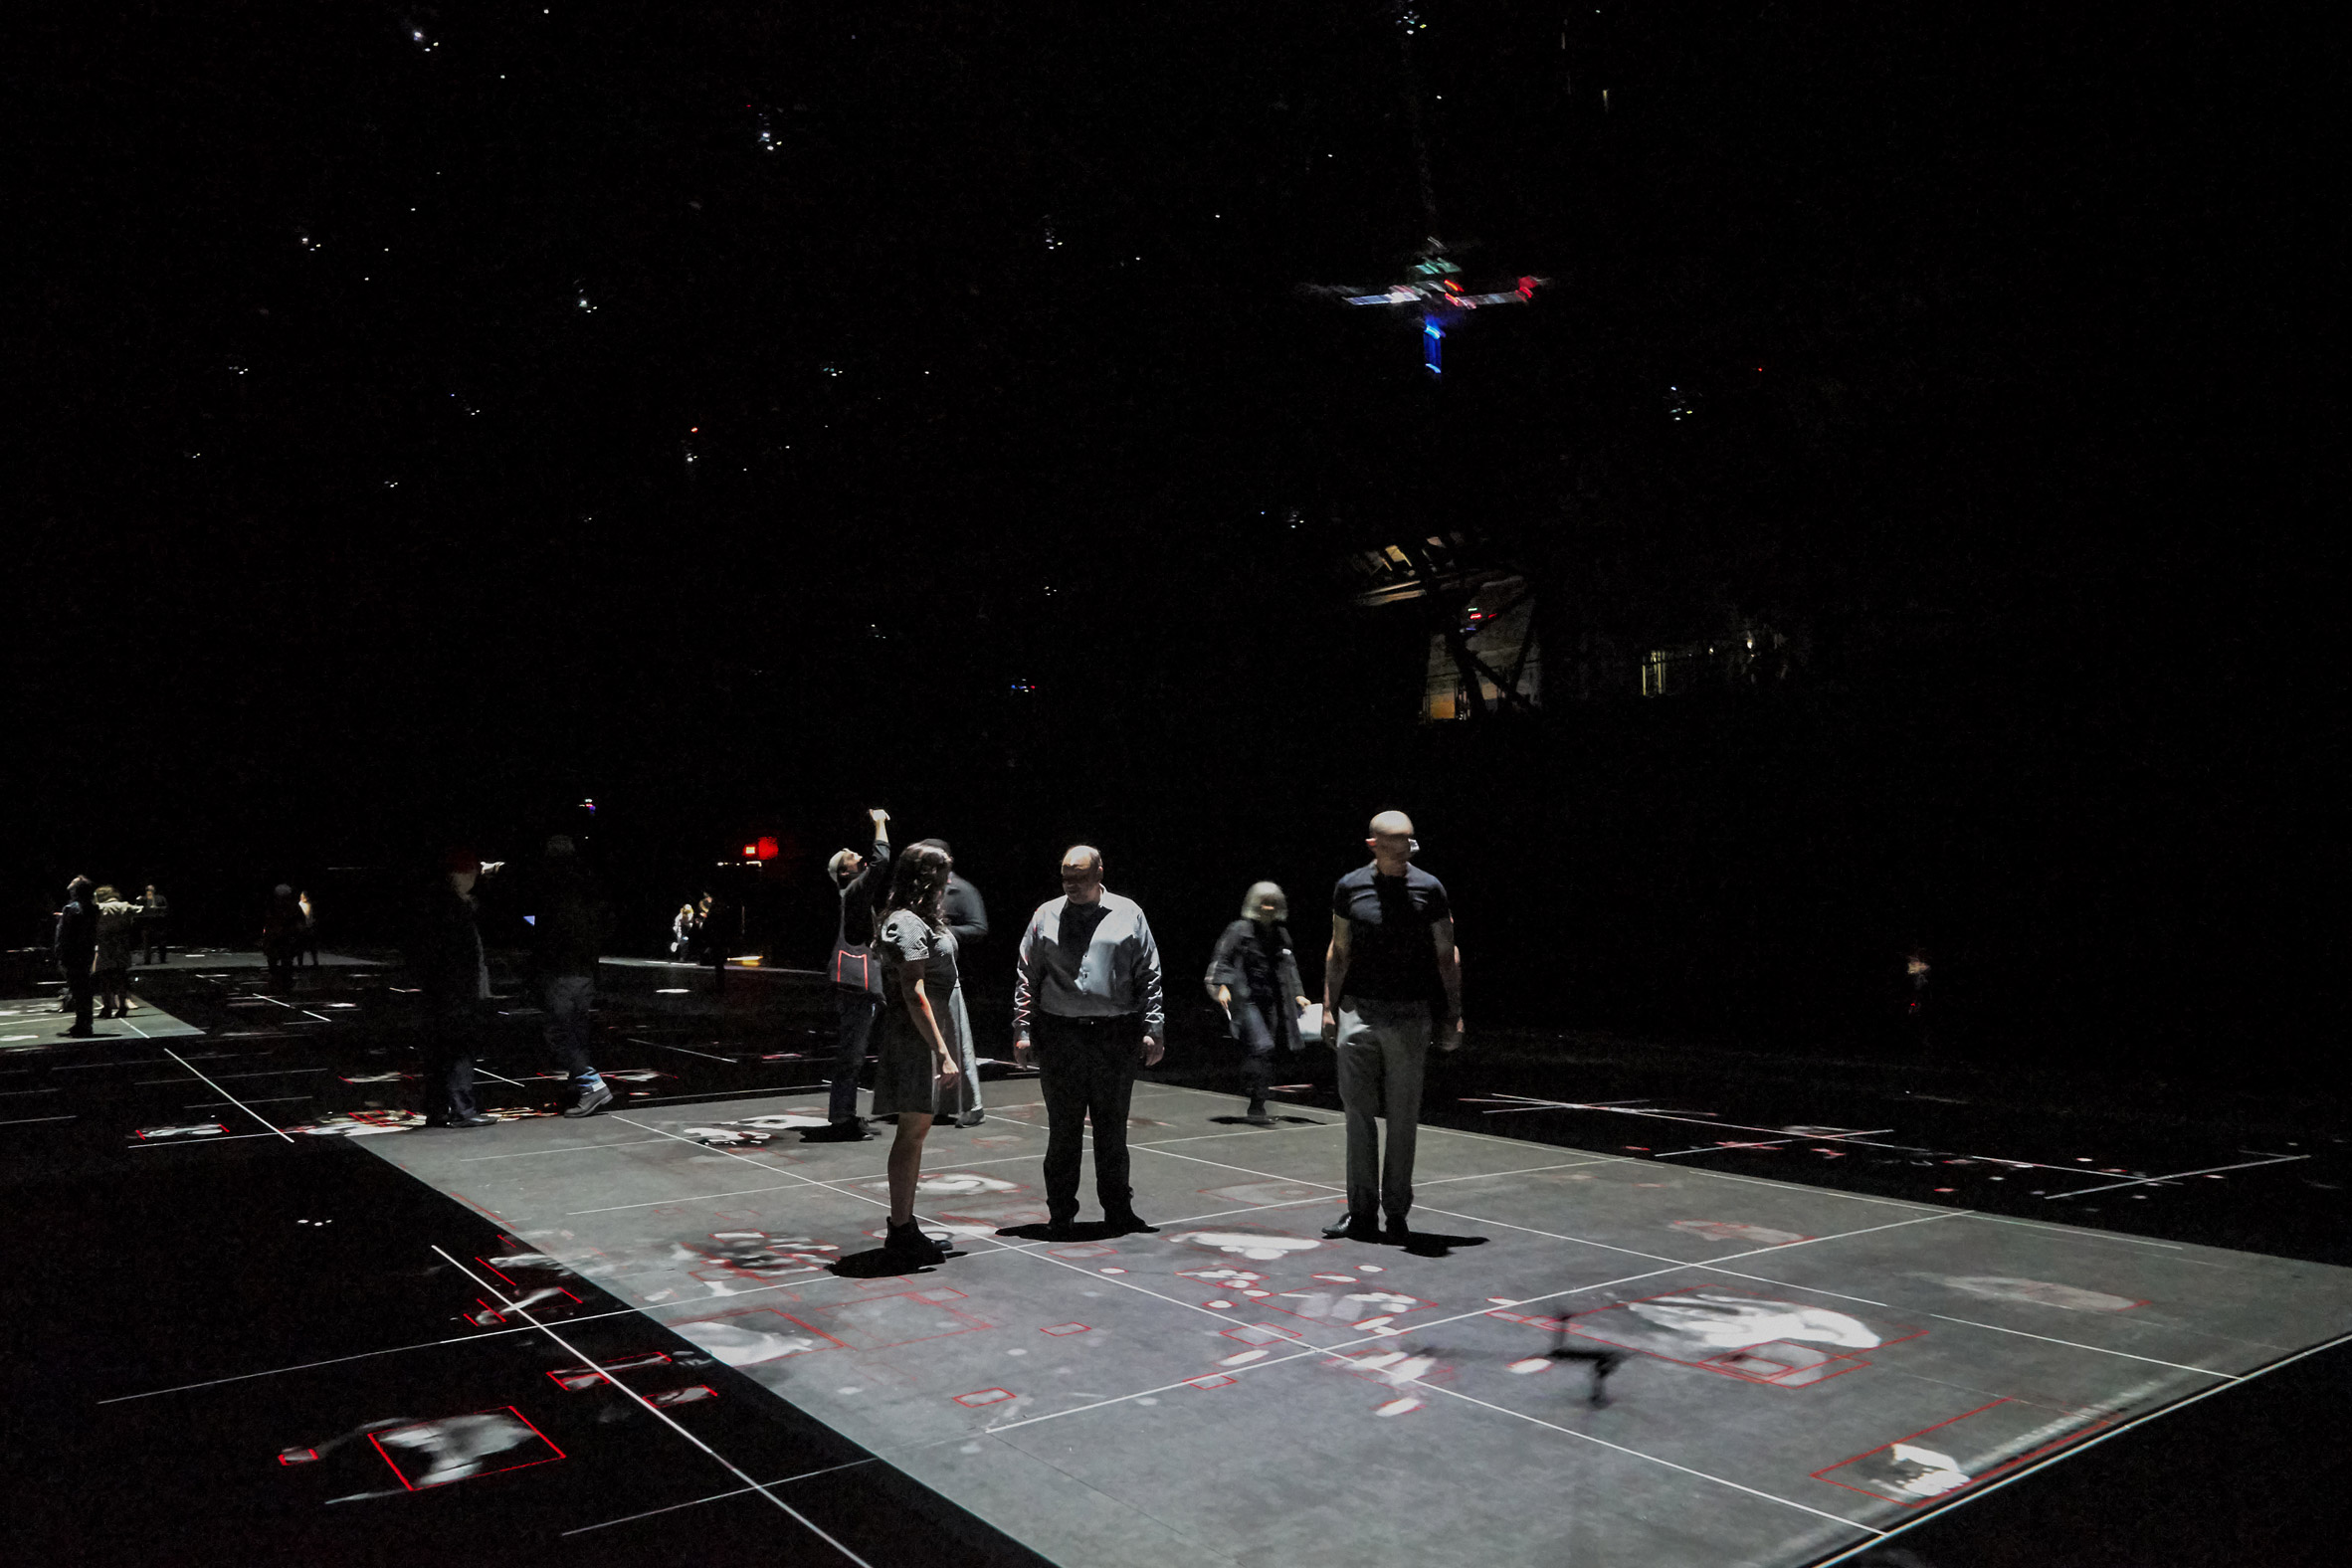 Drones stalk visitors to Herzog & de Meuron and Ai Weiwei's Park Avenue Armory installation